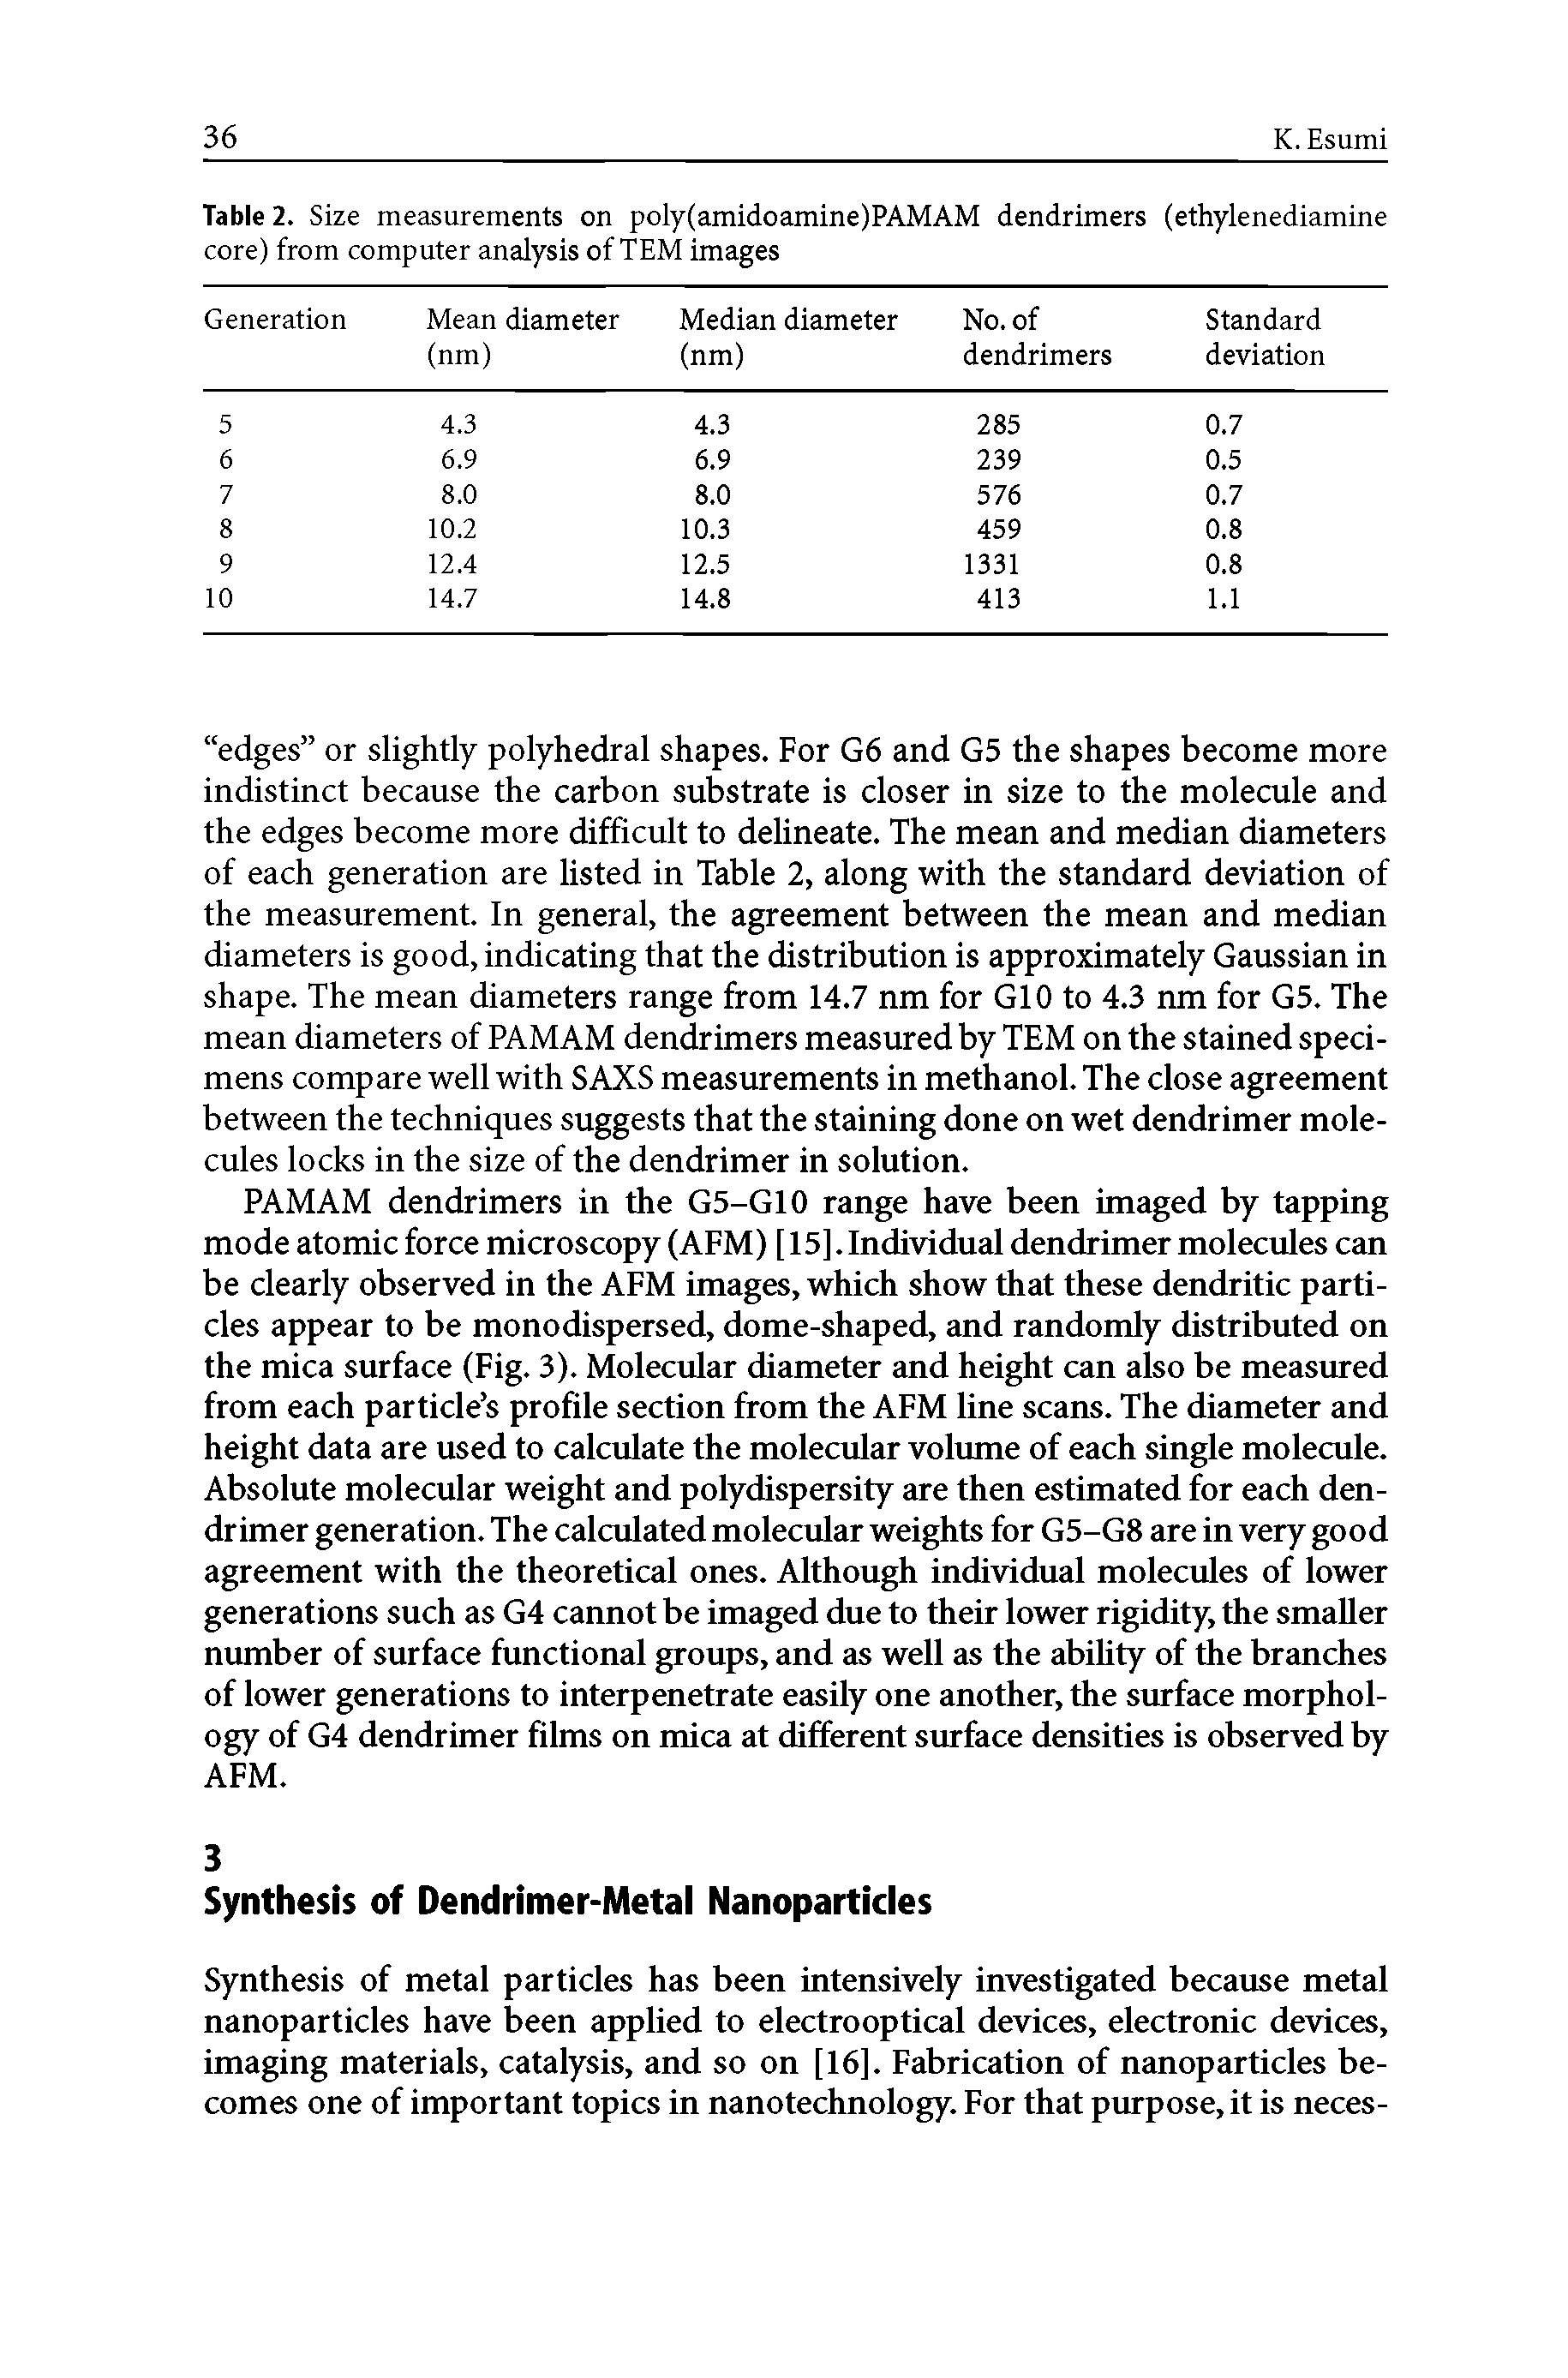 Table 2. Size measurements on poly(amidoamine)PAMAM dendrimers (ethylenediamine core) from computer analysis of TEM images...